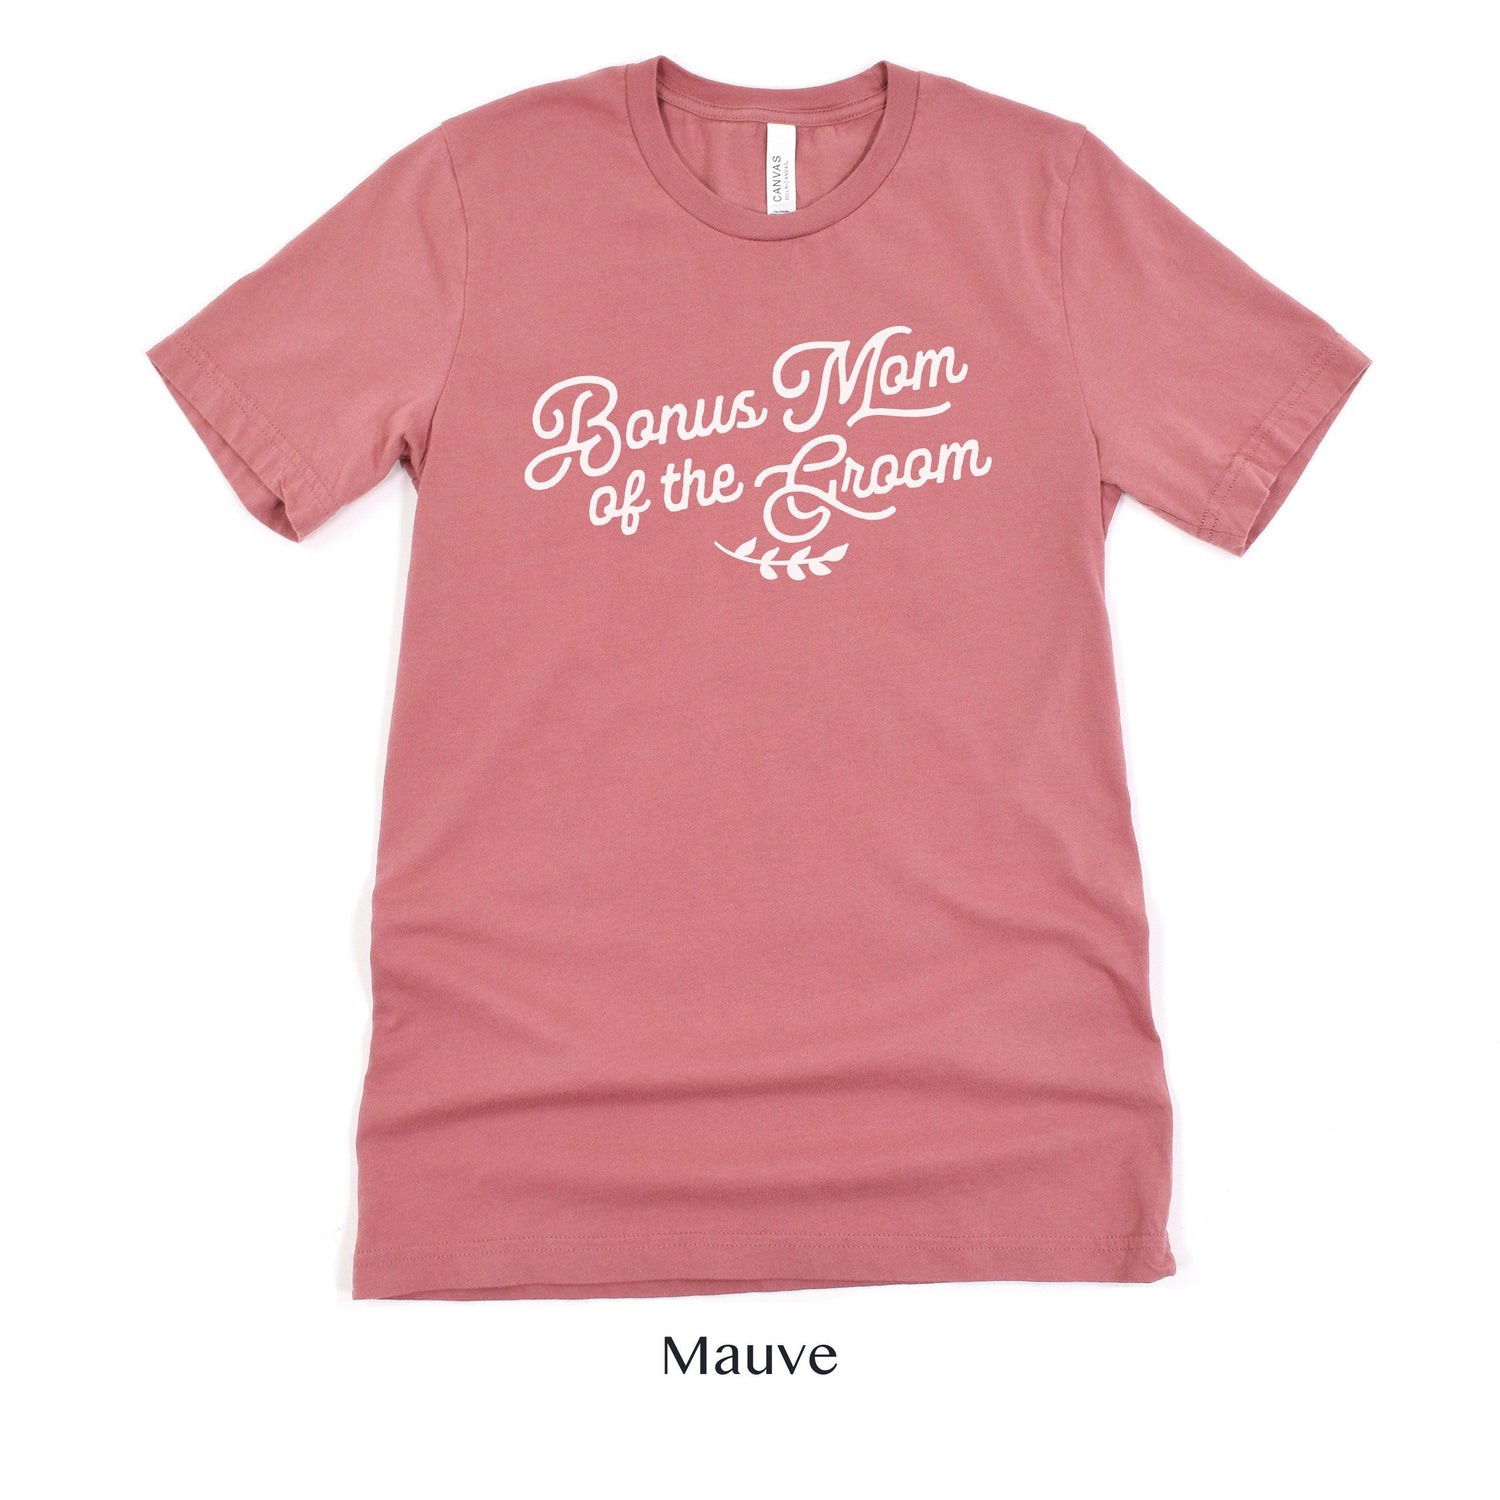 Bonus Mom of the Groom Short-sleeve Tee by Oaklynn Lane - Mauve Dusty Rose Shirt